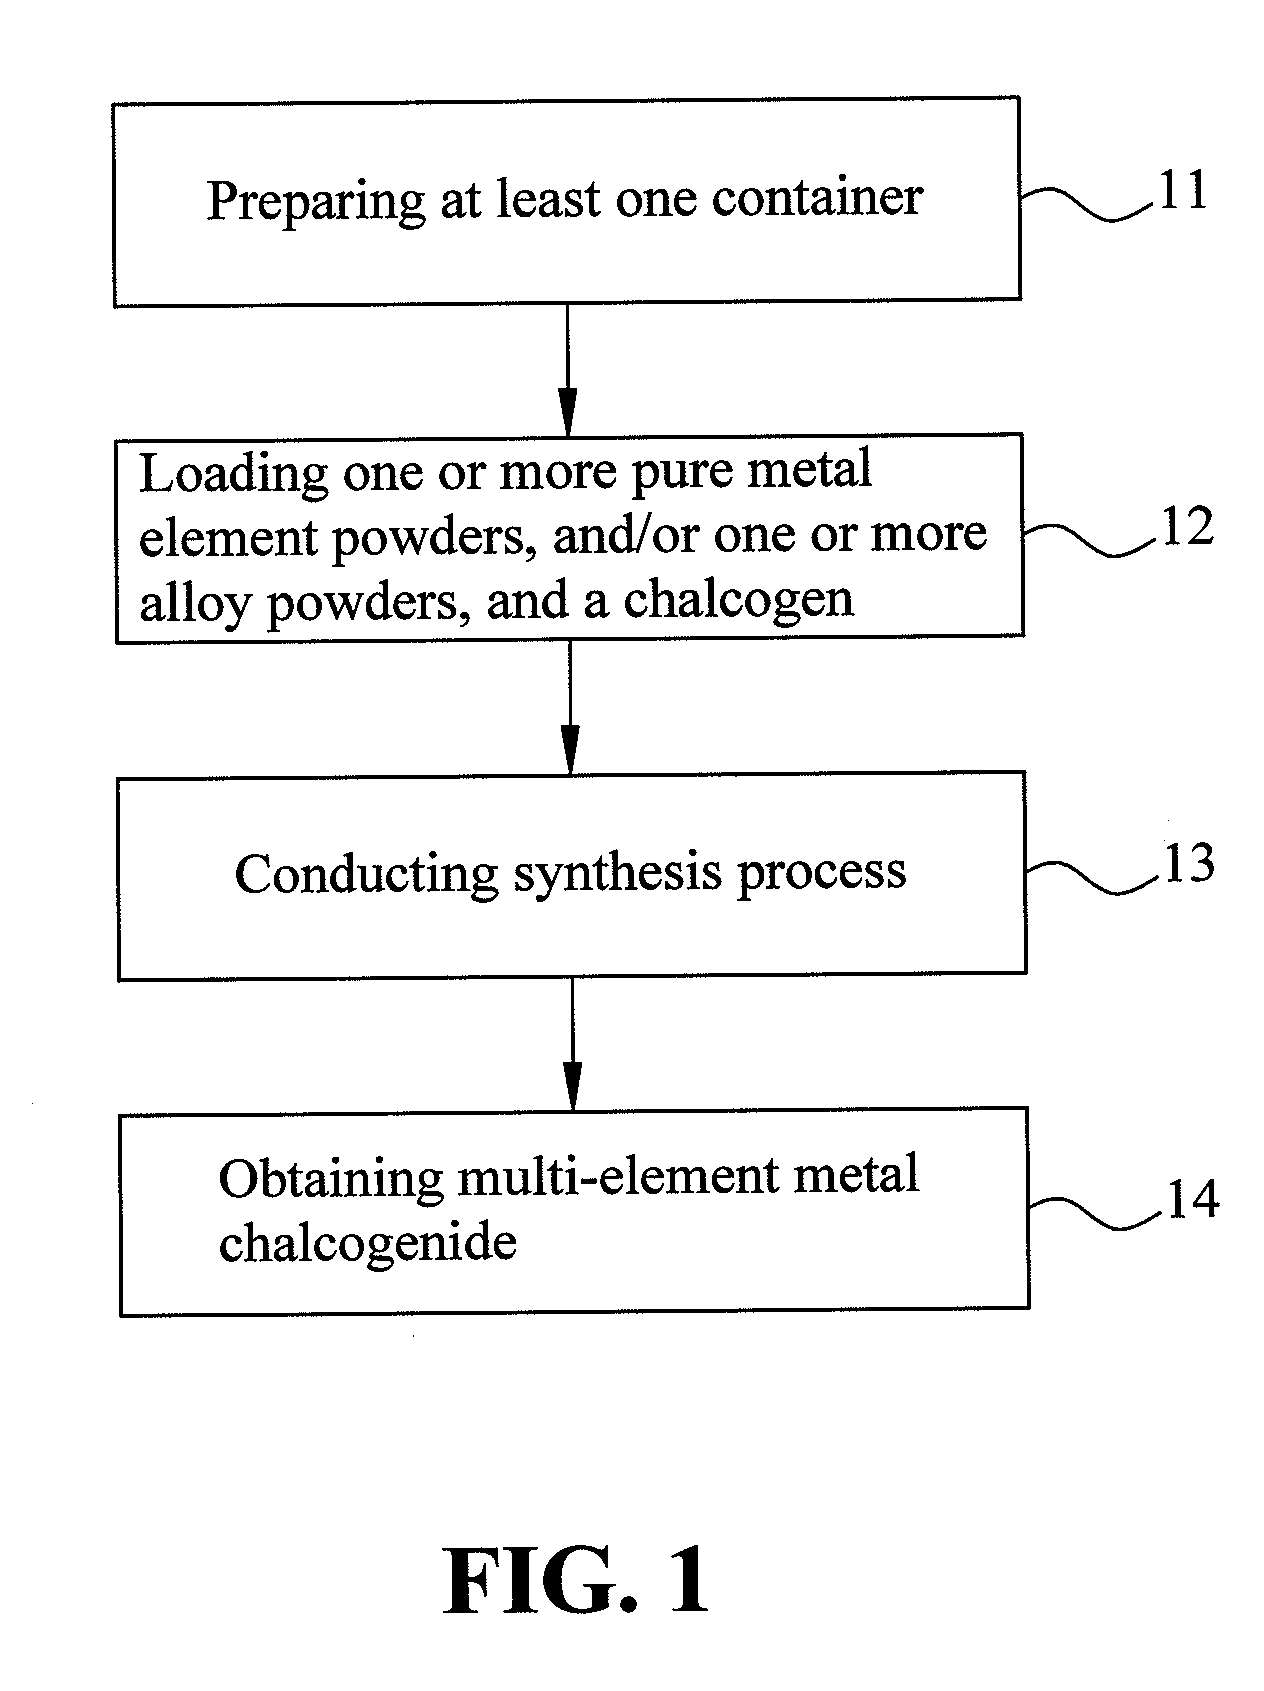 Multi-element metal chalcogenide and method for preparing the same